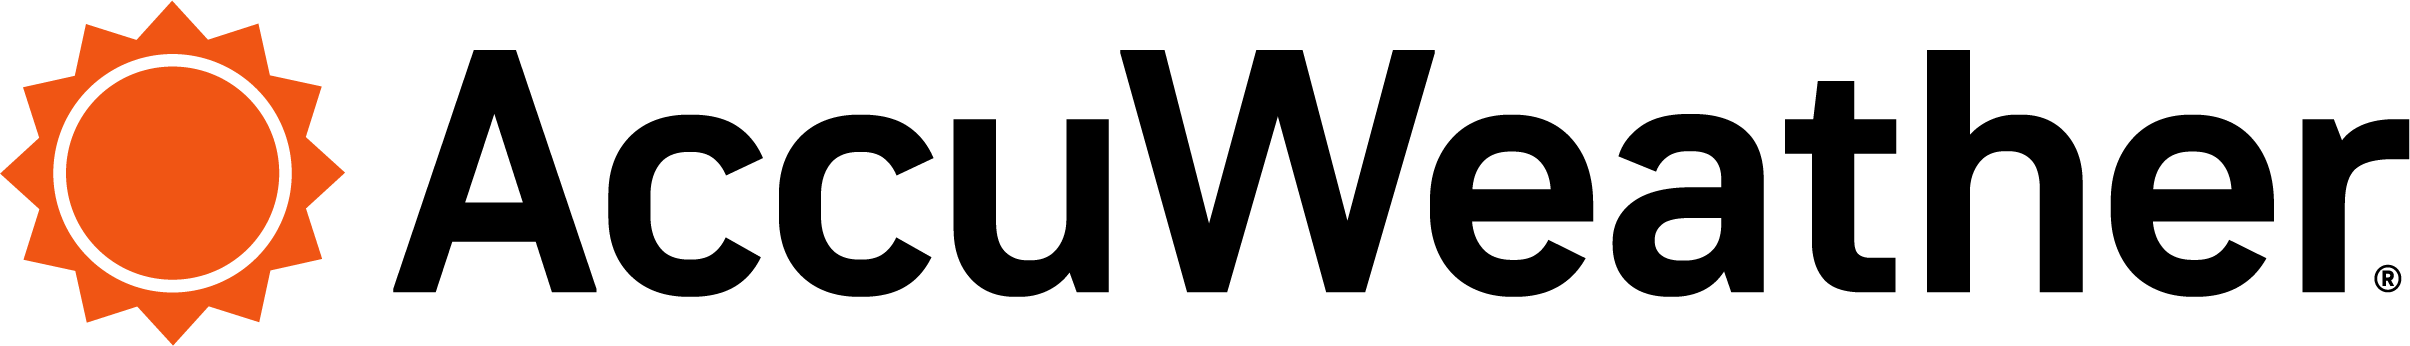 accuweather logo